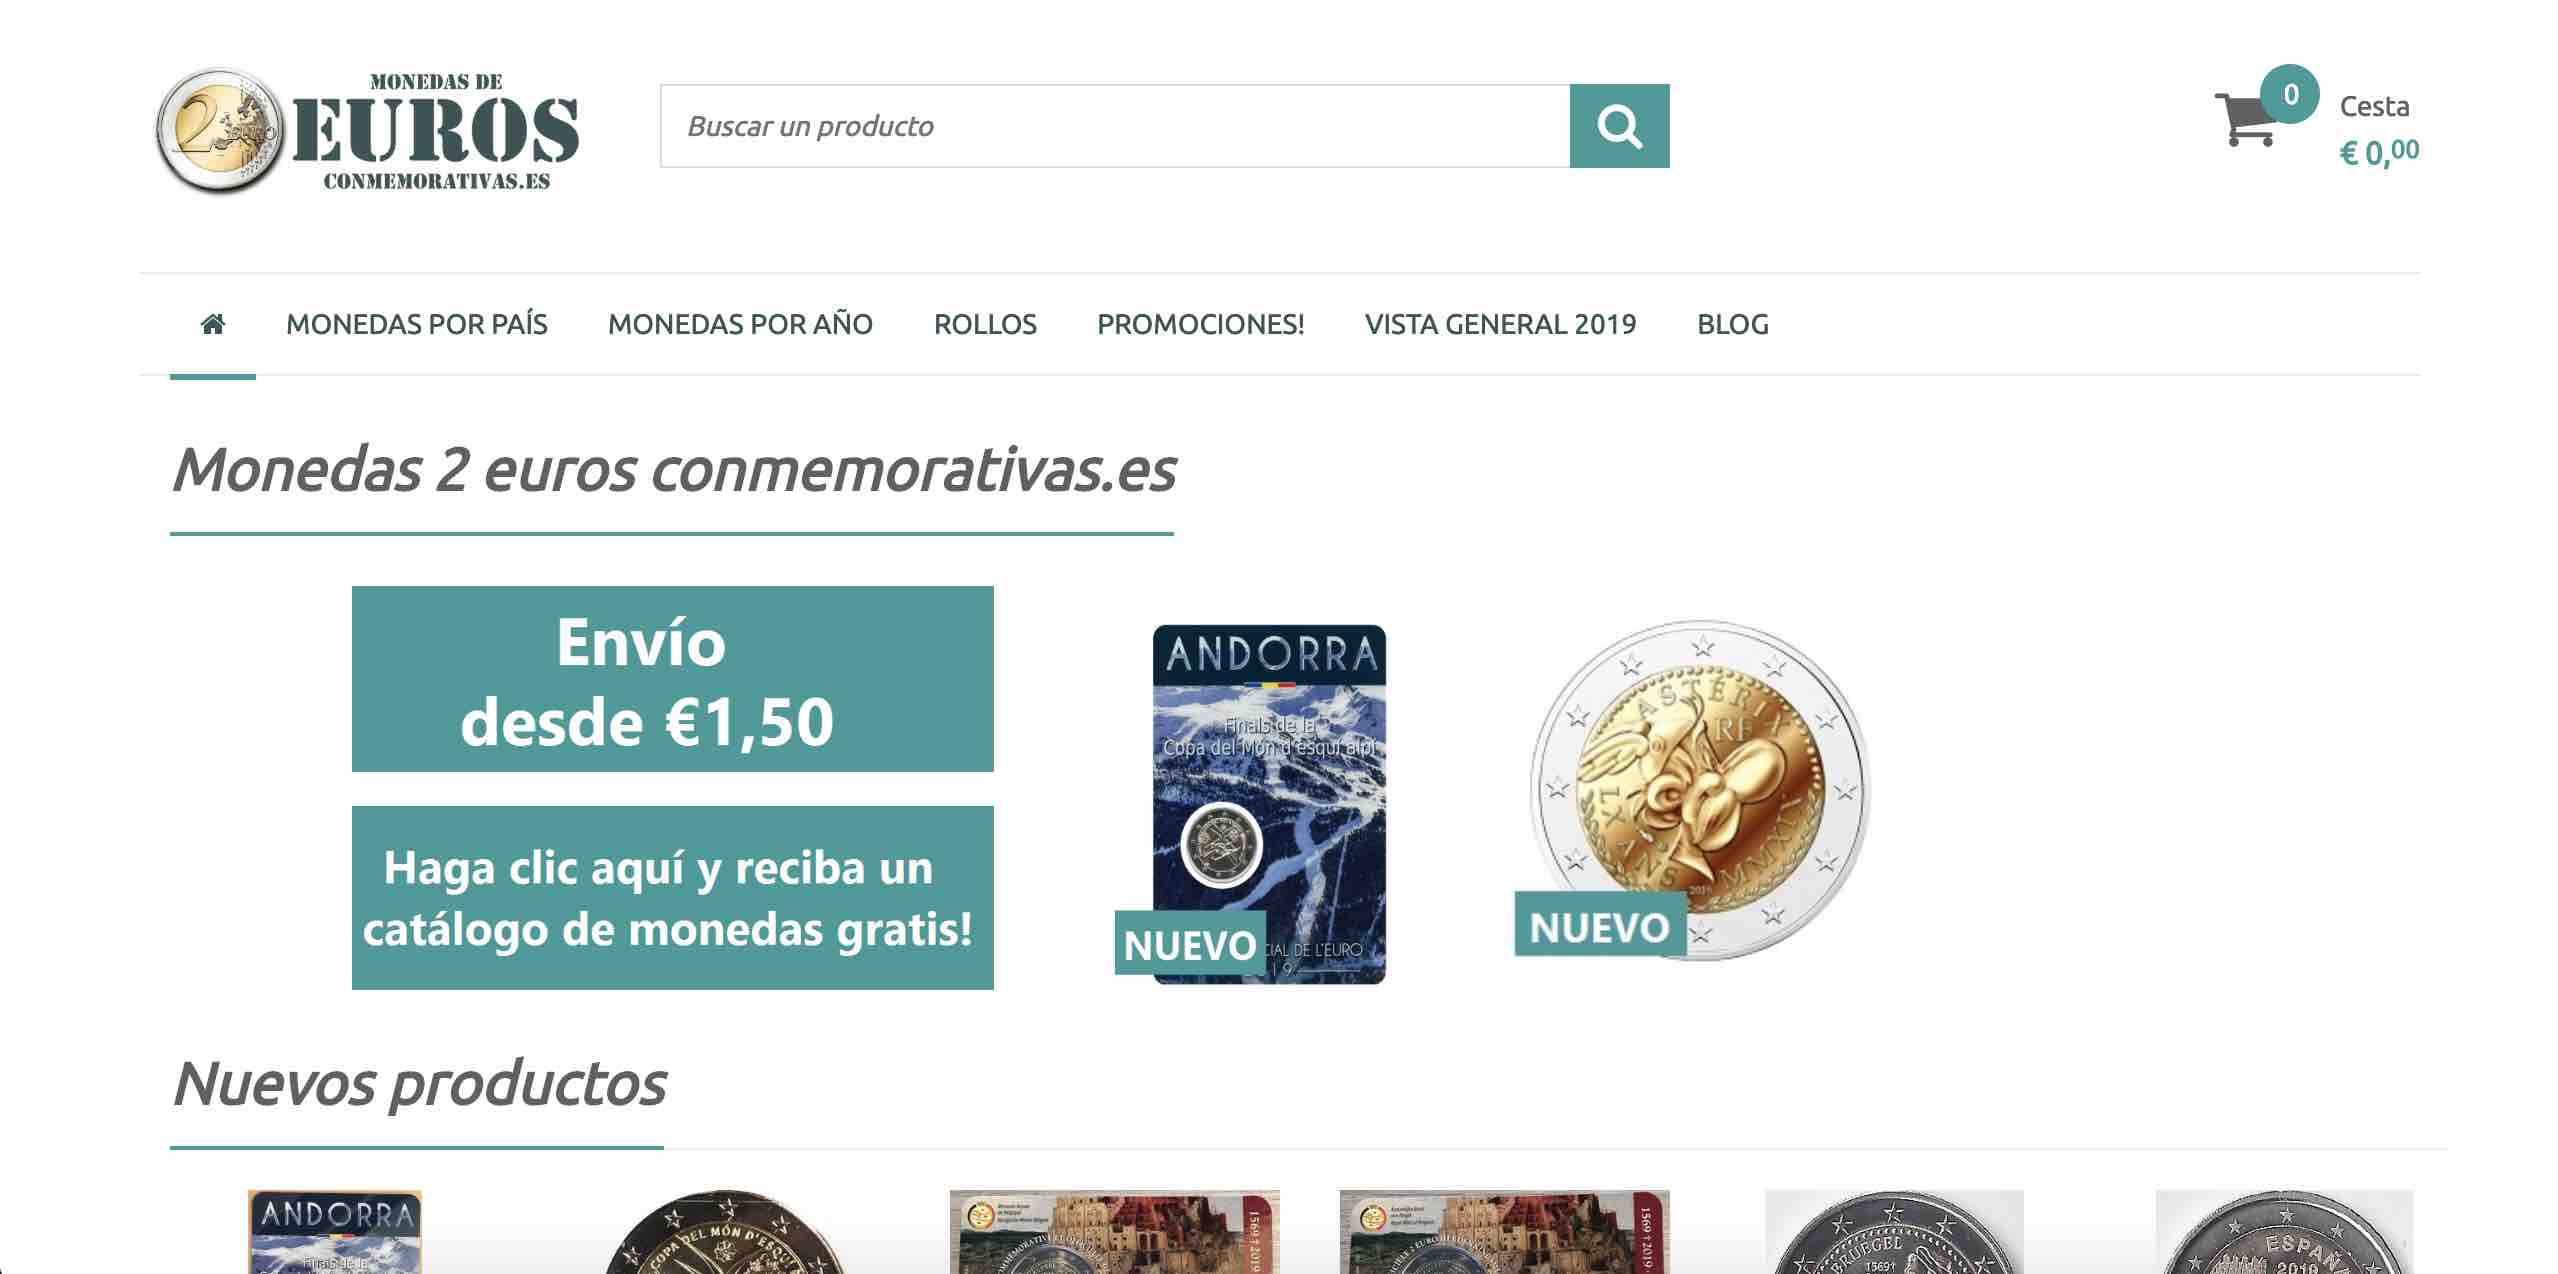 Schermafbeelding monedas2eurosconmemorativas.es 1